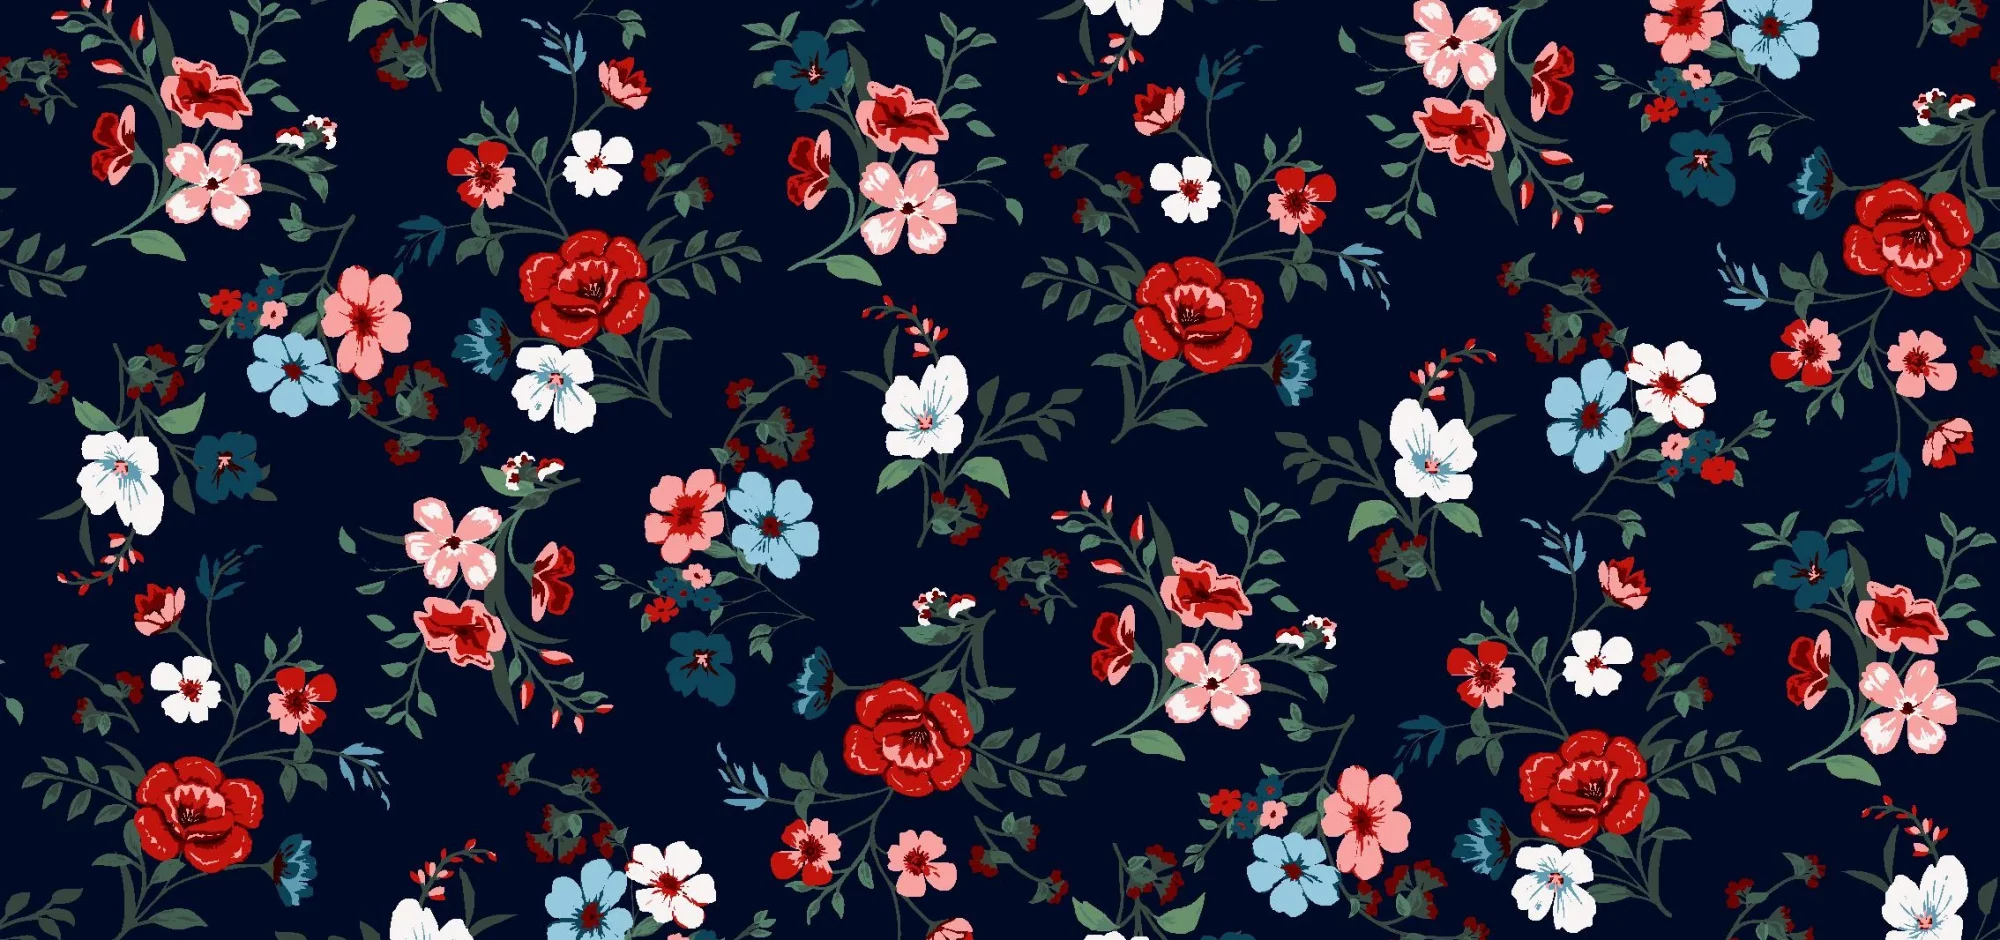 Floral Print Wallpaper 1